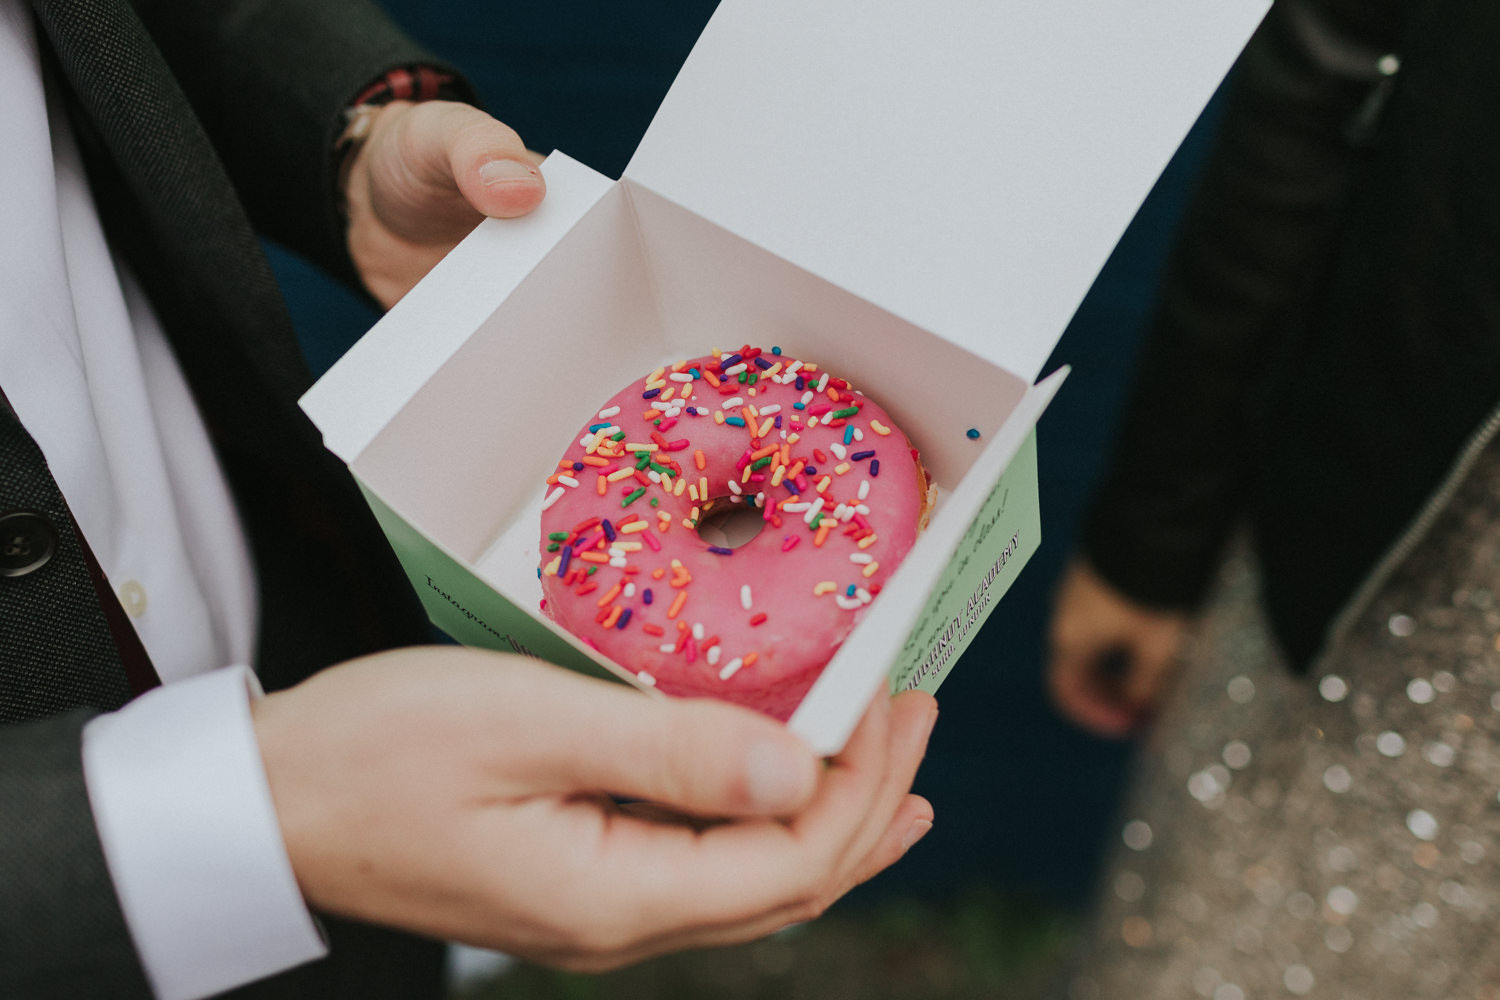 A doughnut inside a box.